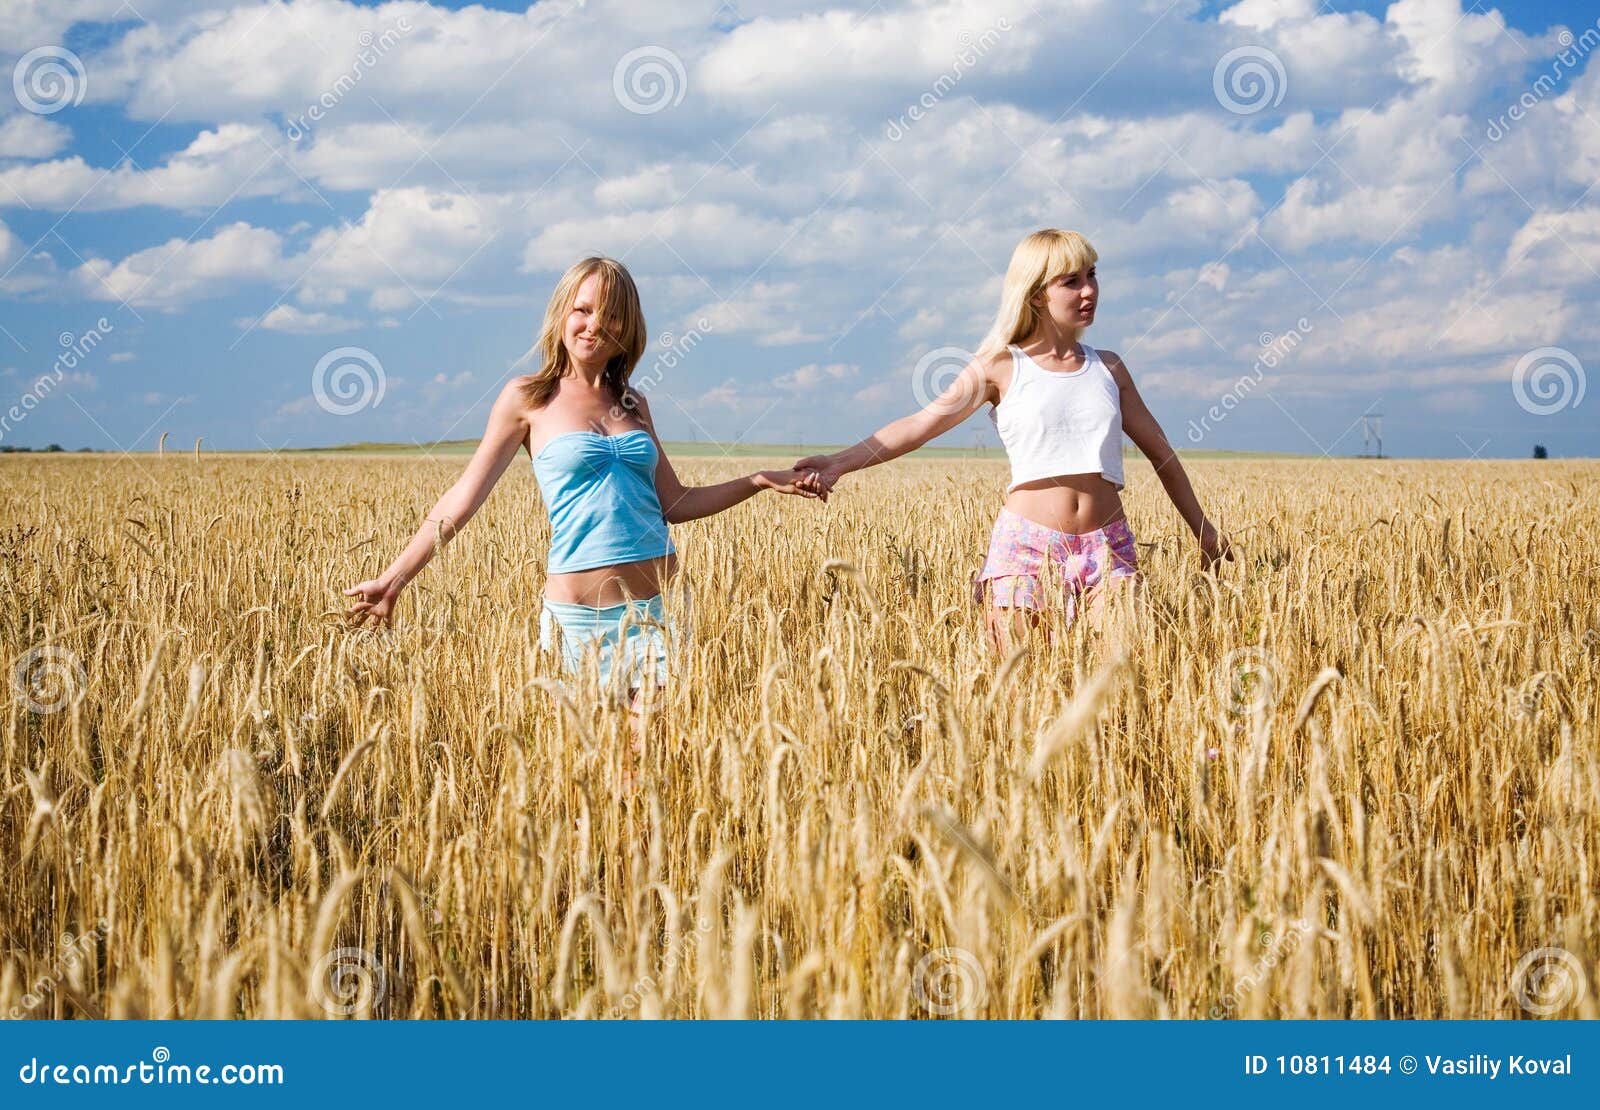 Woman in wheat field | Stock Photo | Colourbox